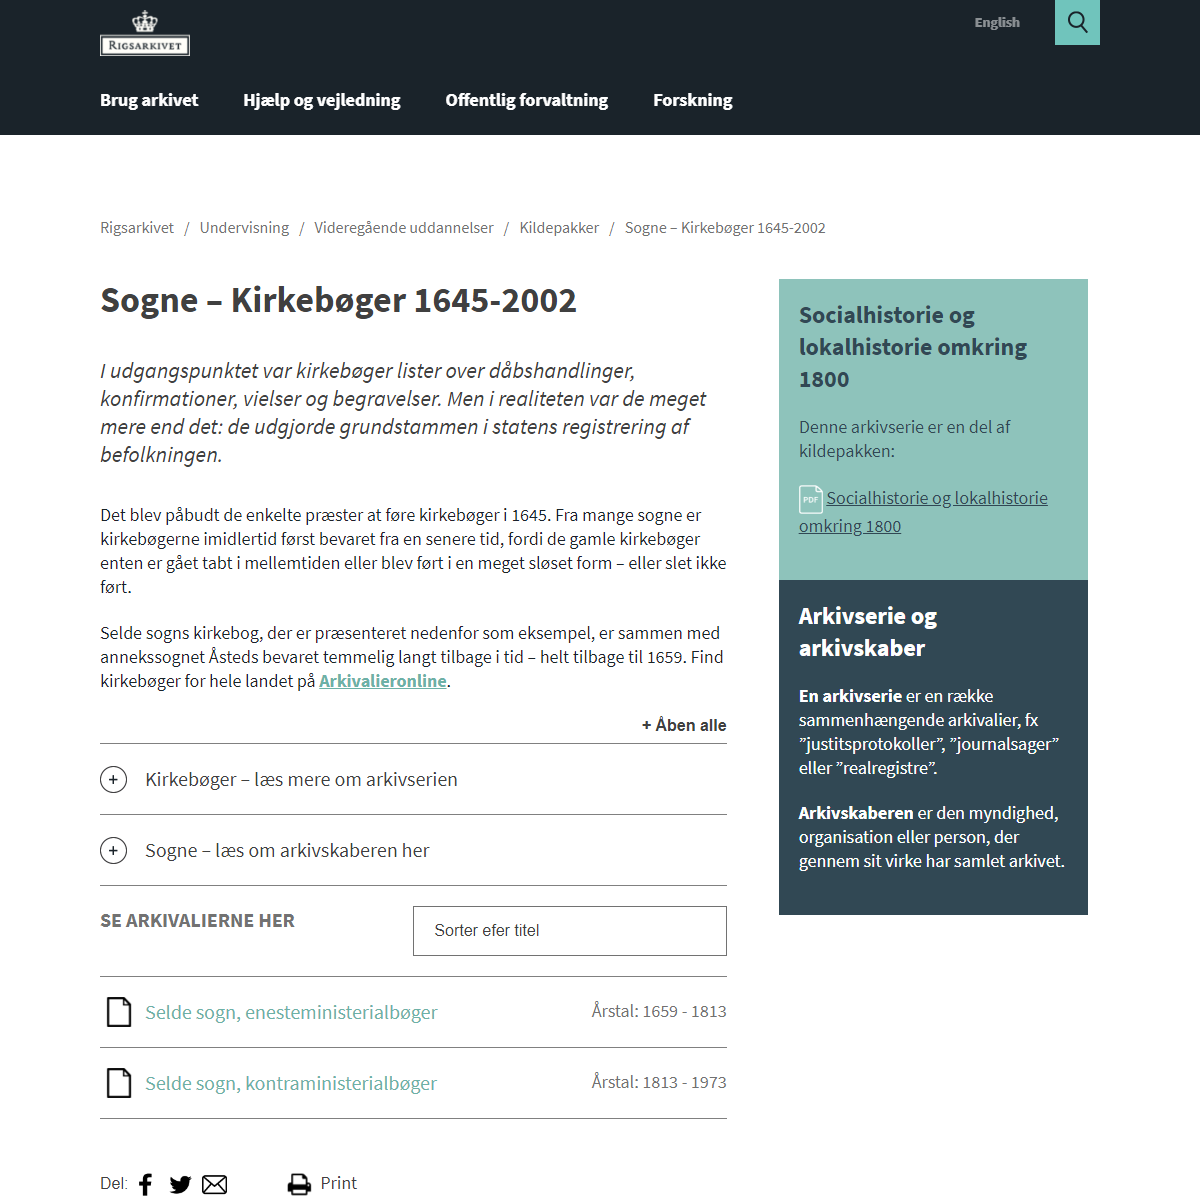 A complete backup of https://www.sa.dk/da/archive_series/sogne-kirkeboeger-1645-2002/